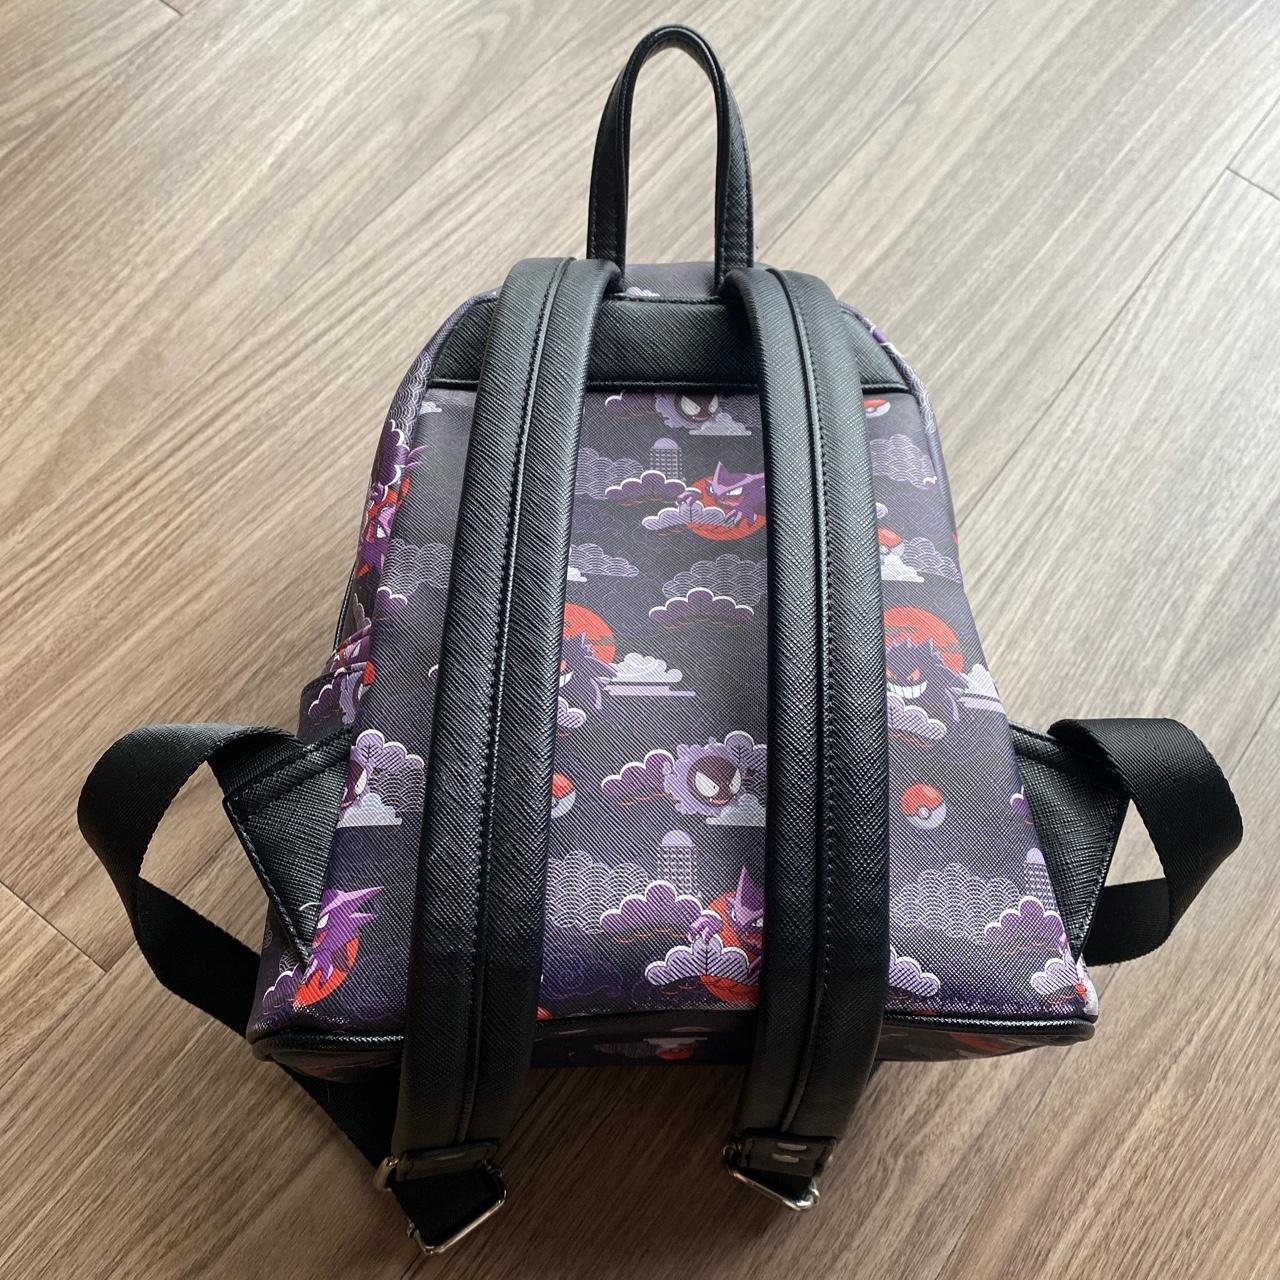 Pokemon Ghost Type Print Nylon Backpack